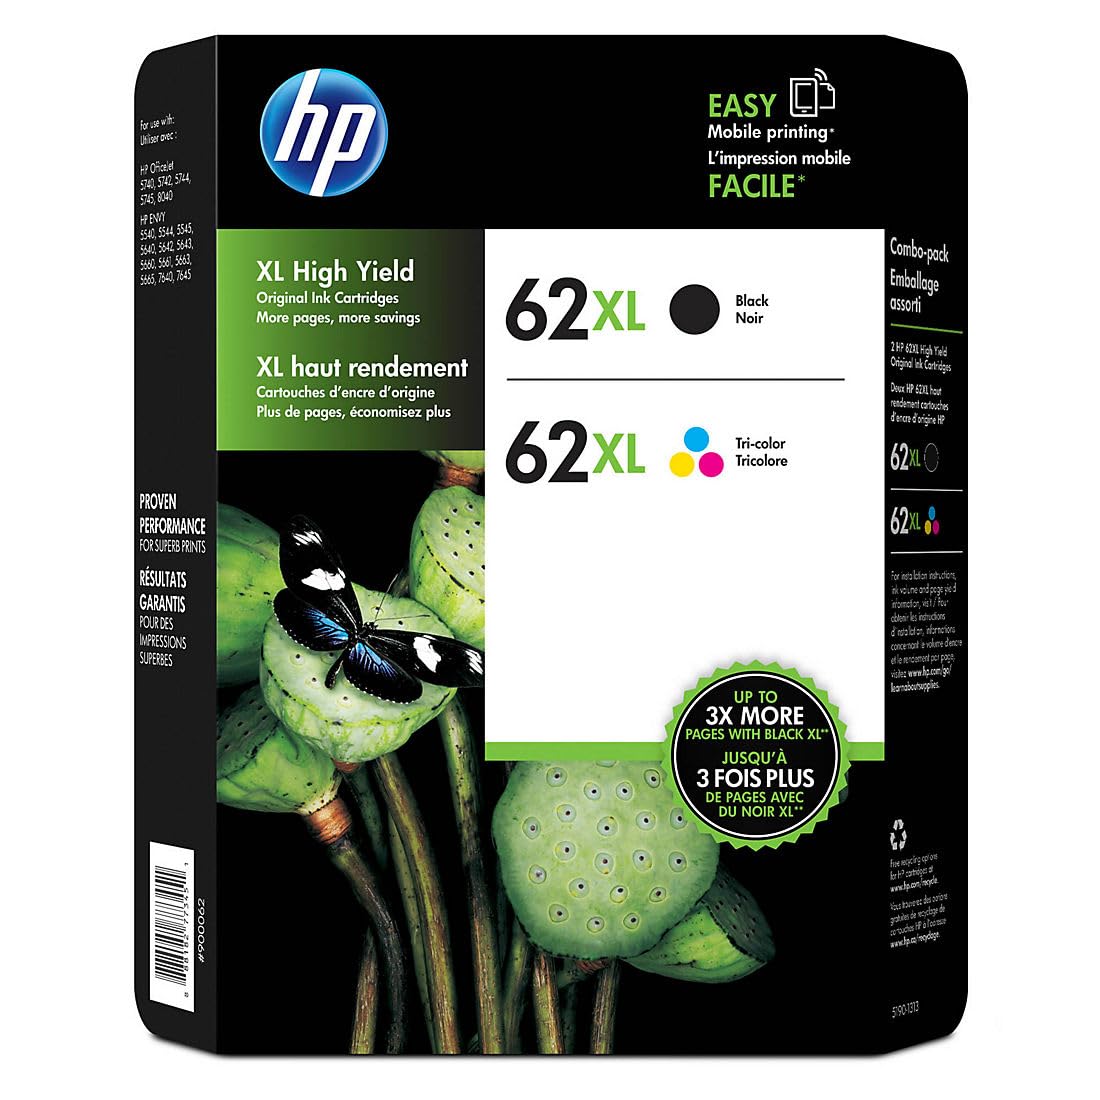 HP 正品 62Xl 高产量黑色和高产量三色 Jetdirect 打印墨盒